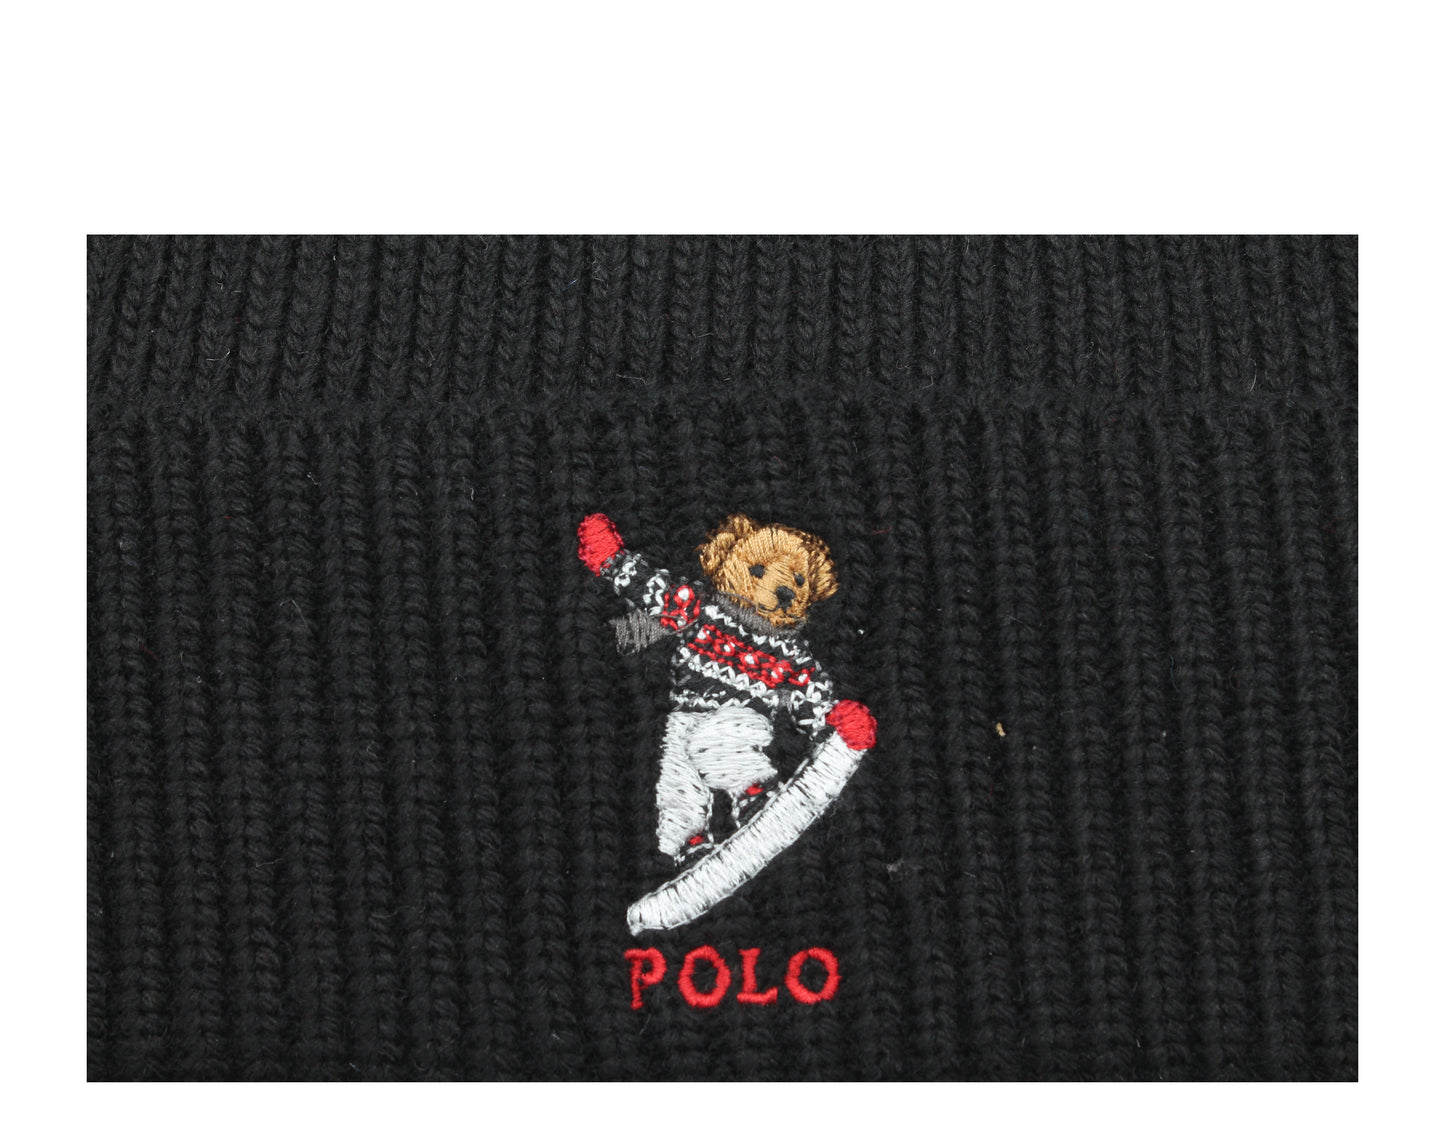 Polo Ralph Lauren Polo Bear Snowboard Knit Hat